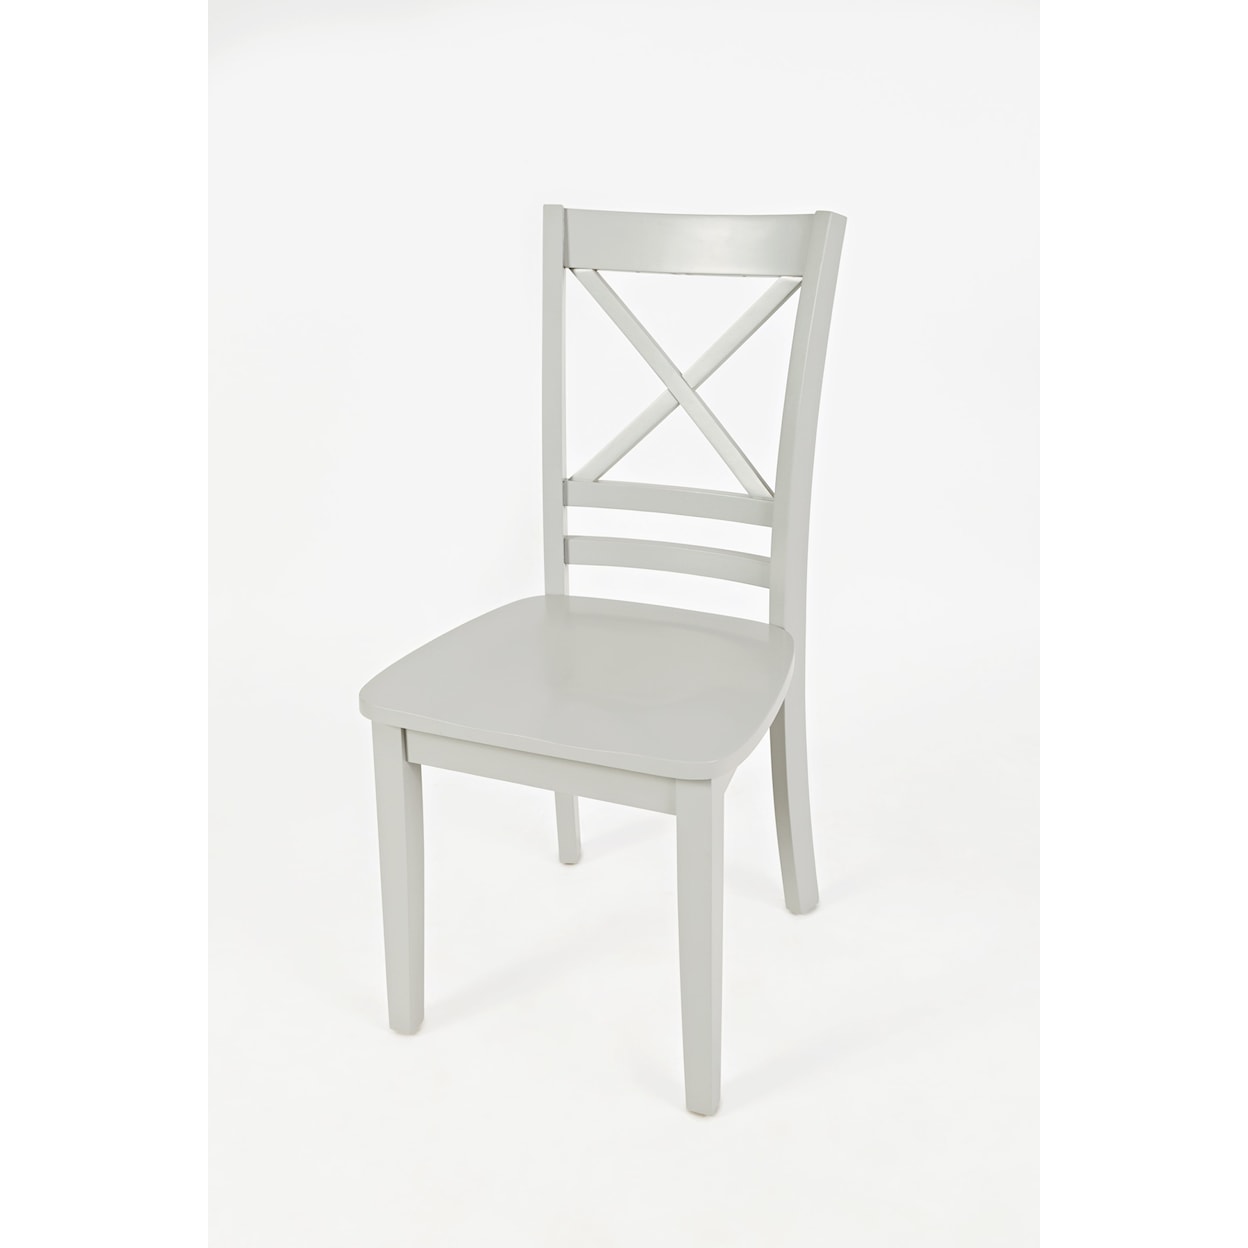 VFM Signature Simplicity “X” Back Side Chair